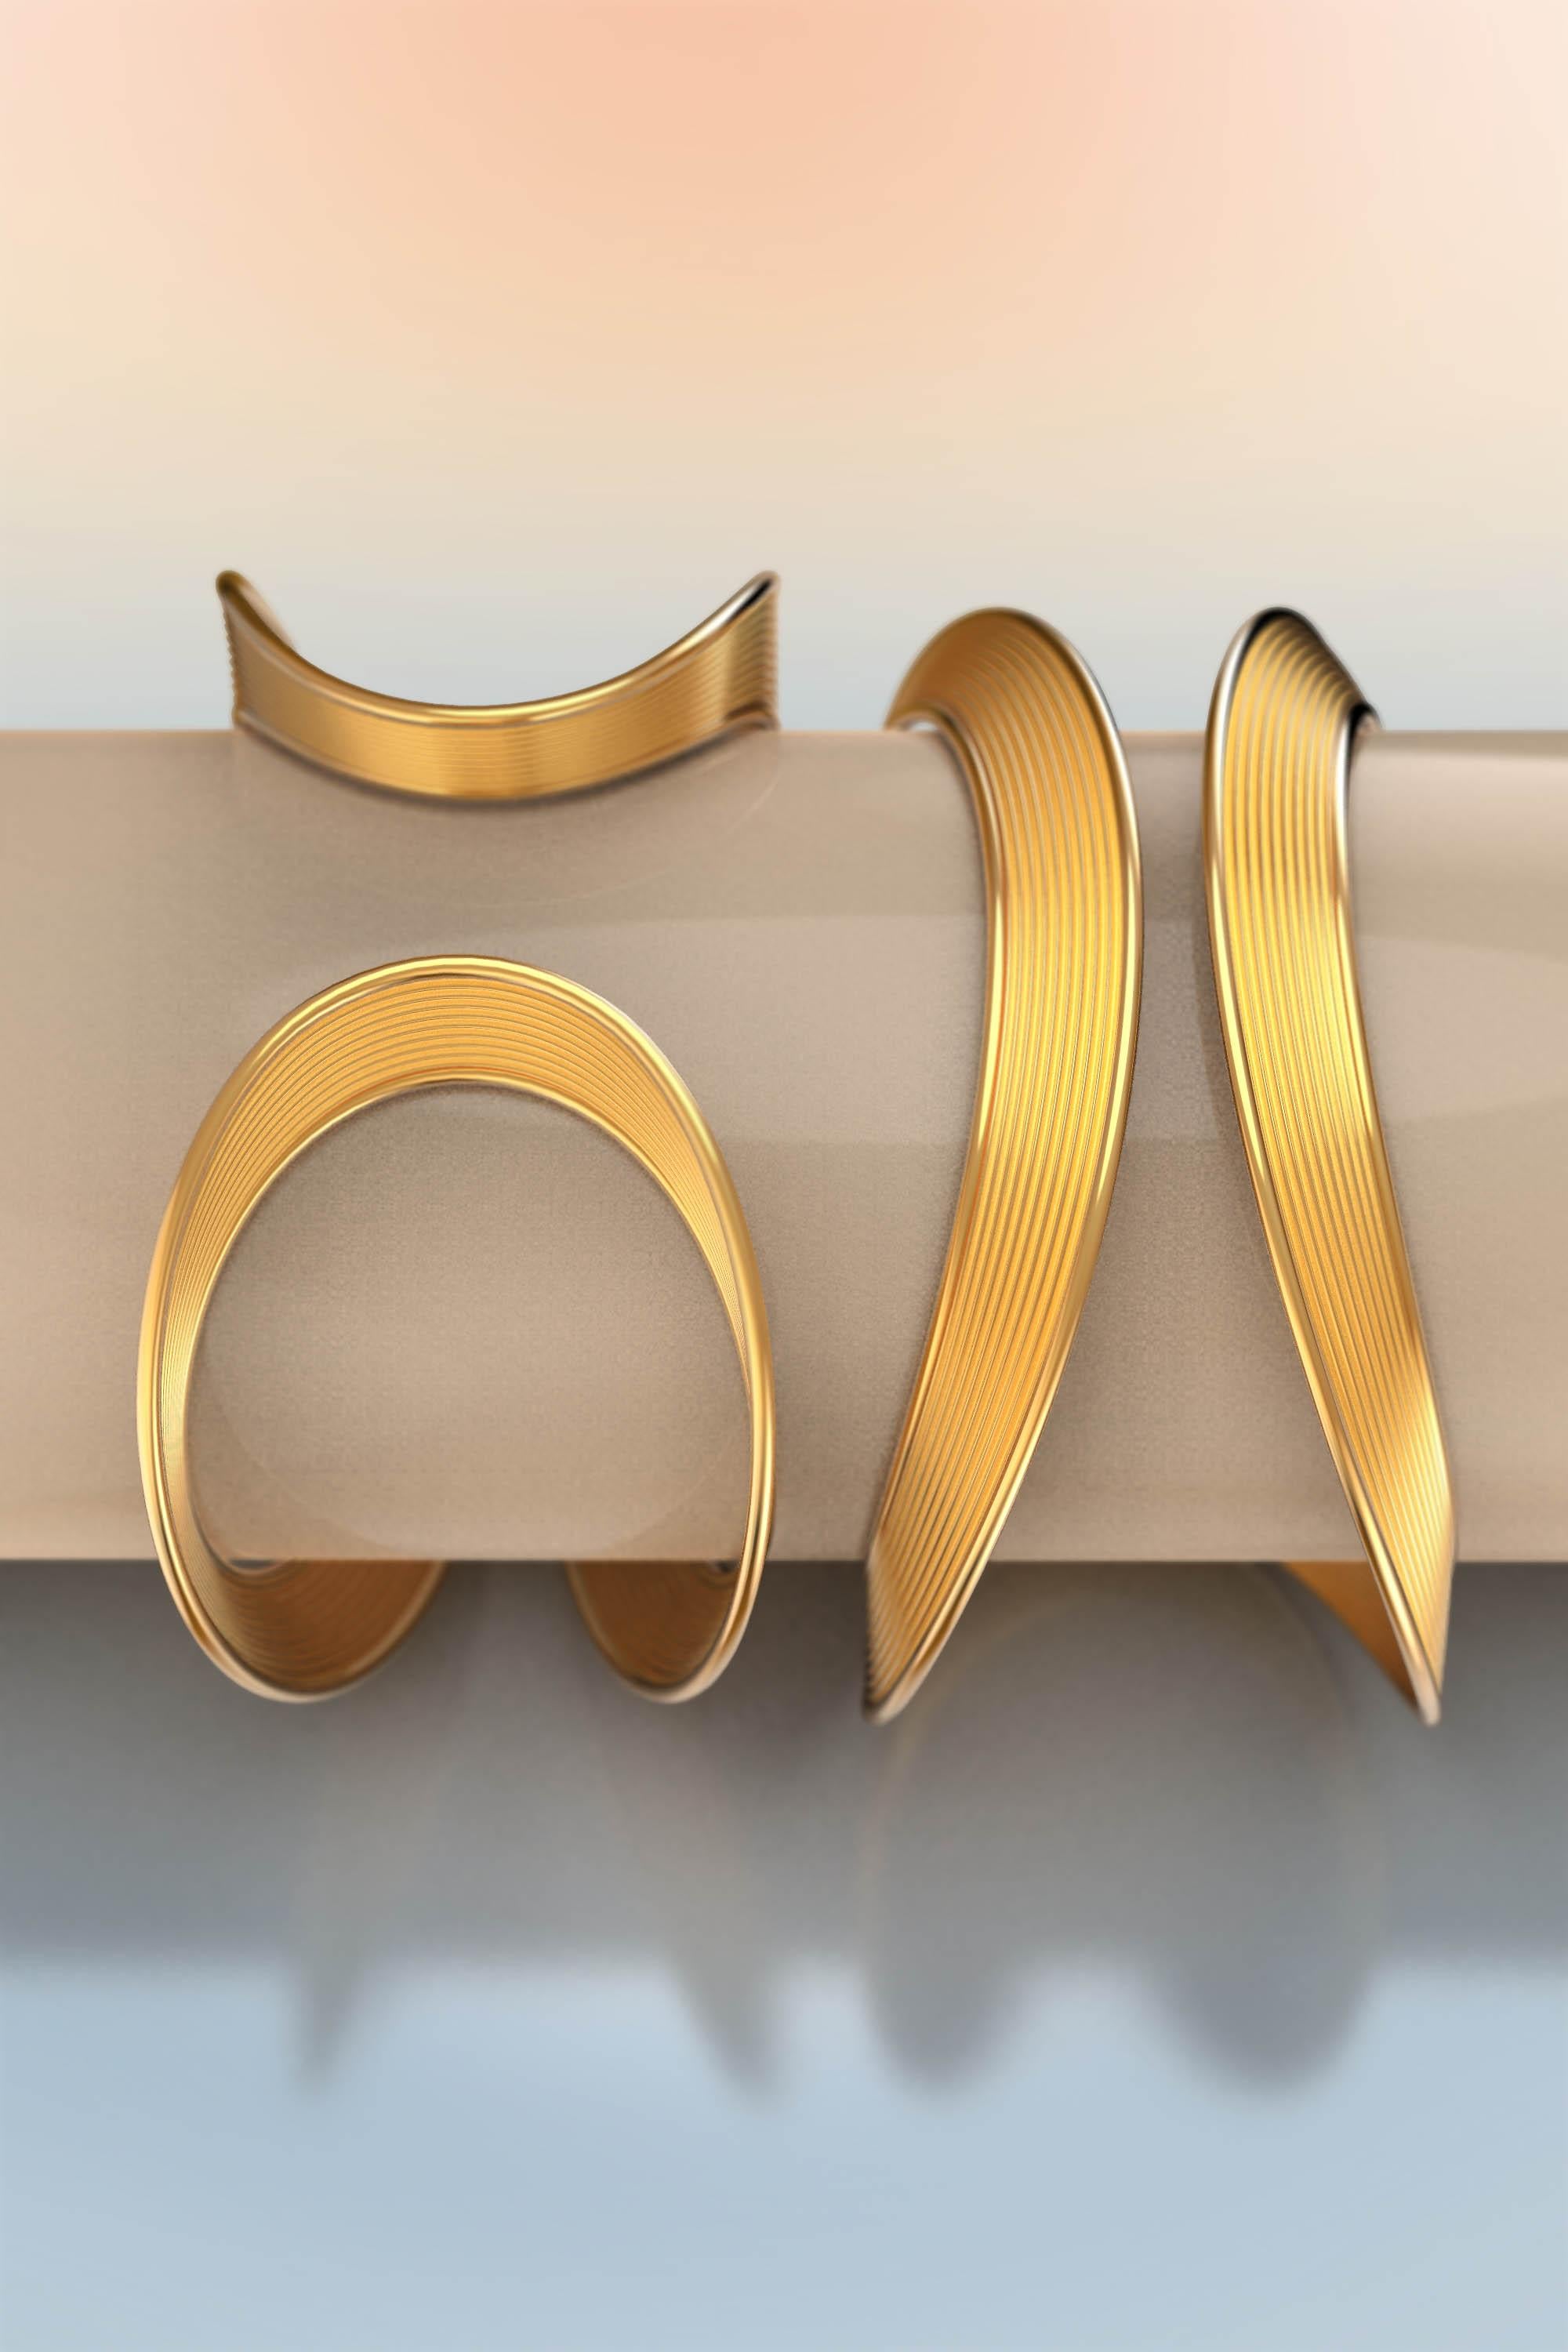 Cuff Bracelet in 18k solid Gold, Italian Gold Jewelry by Oltremare Gioielli In New Condition For Sale In Camisano Vicentino, VI